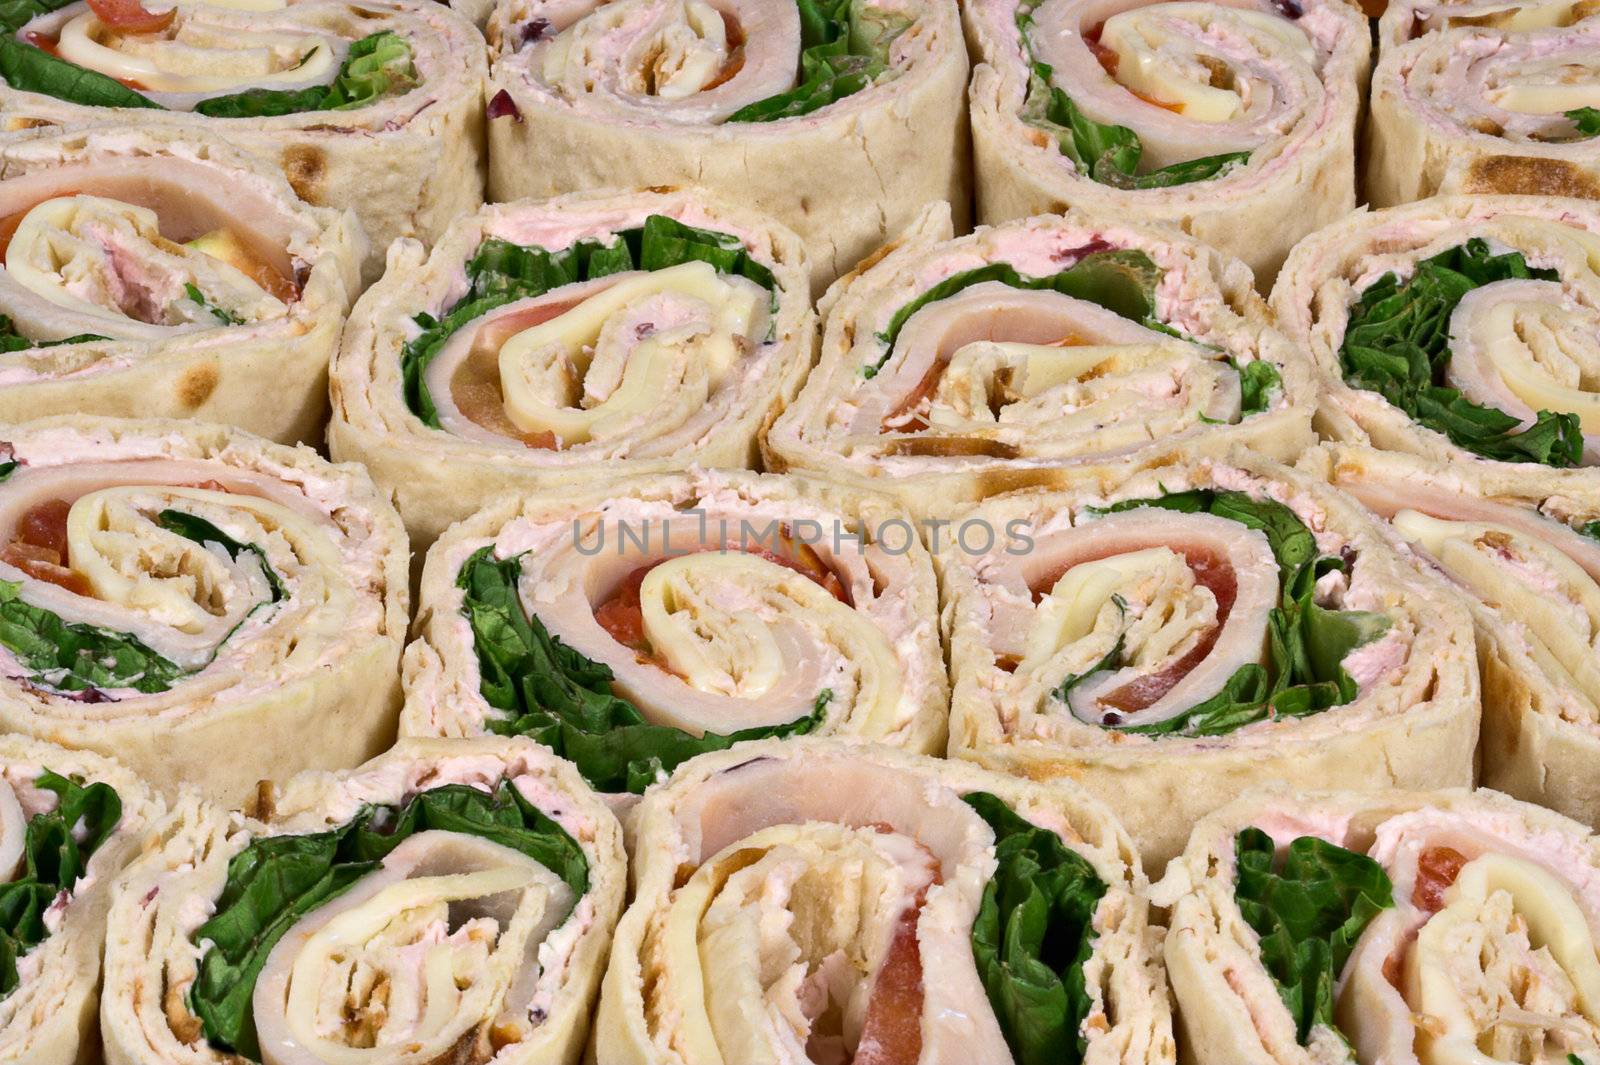 A platter of sliced turkey wrap sandwiches